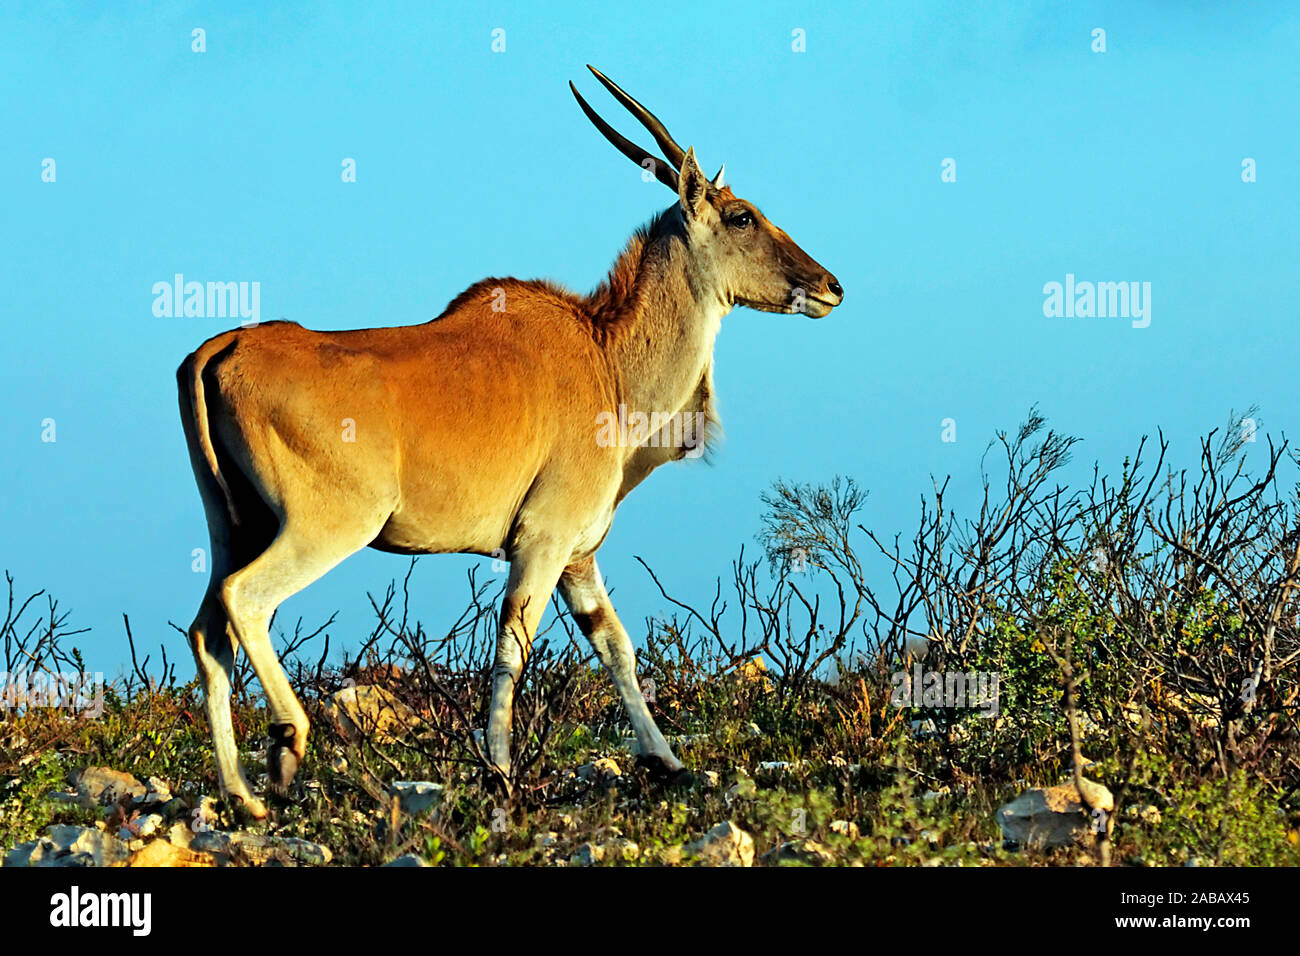 Elan antelope hi-res stock photography and images - Alamy